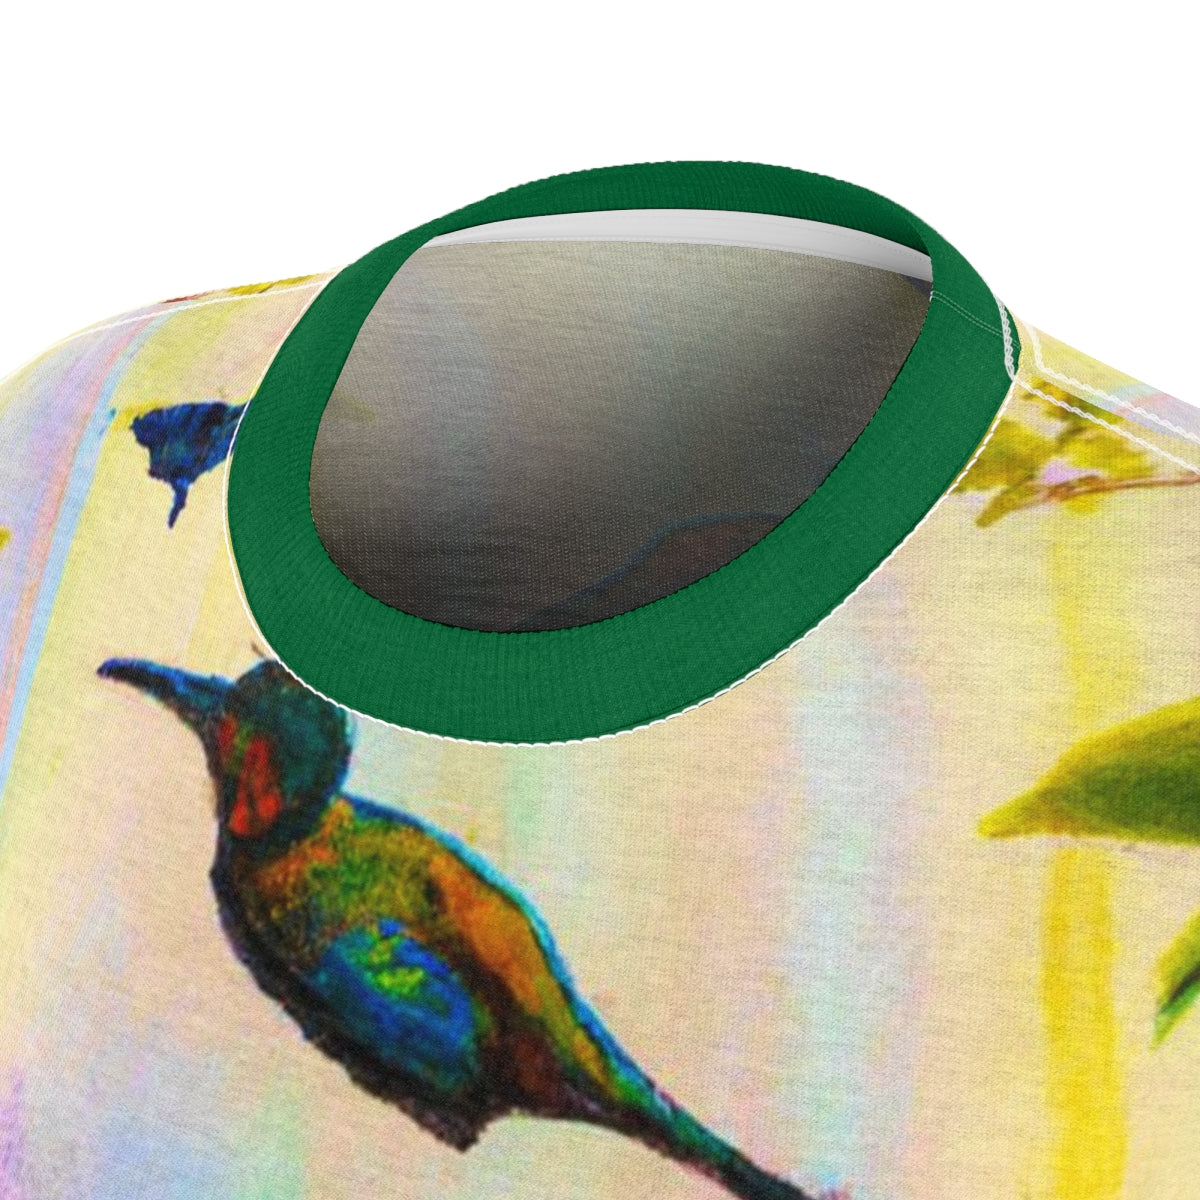 T-Shirt, Green Tropical Bird Paradise